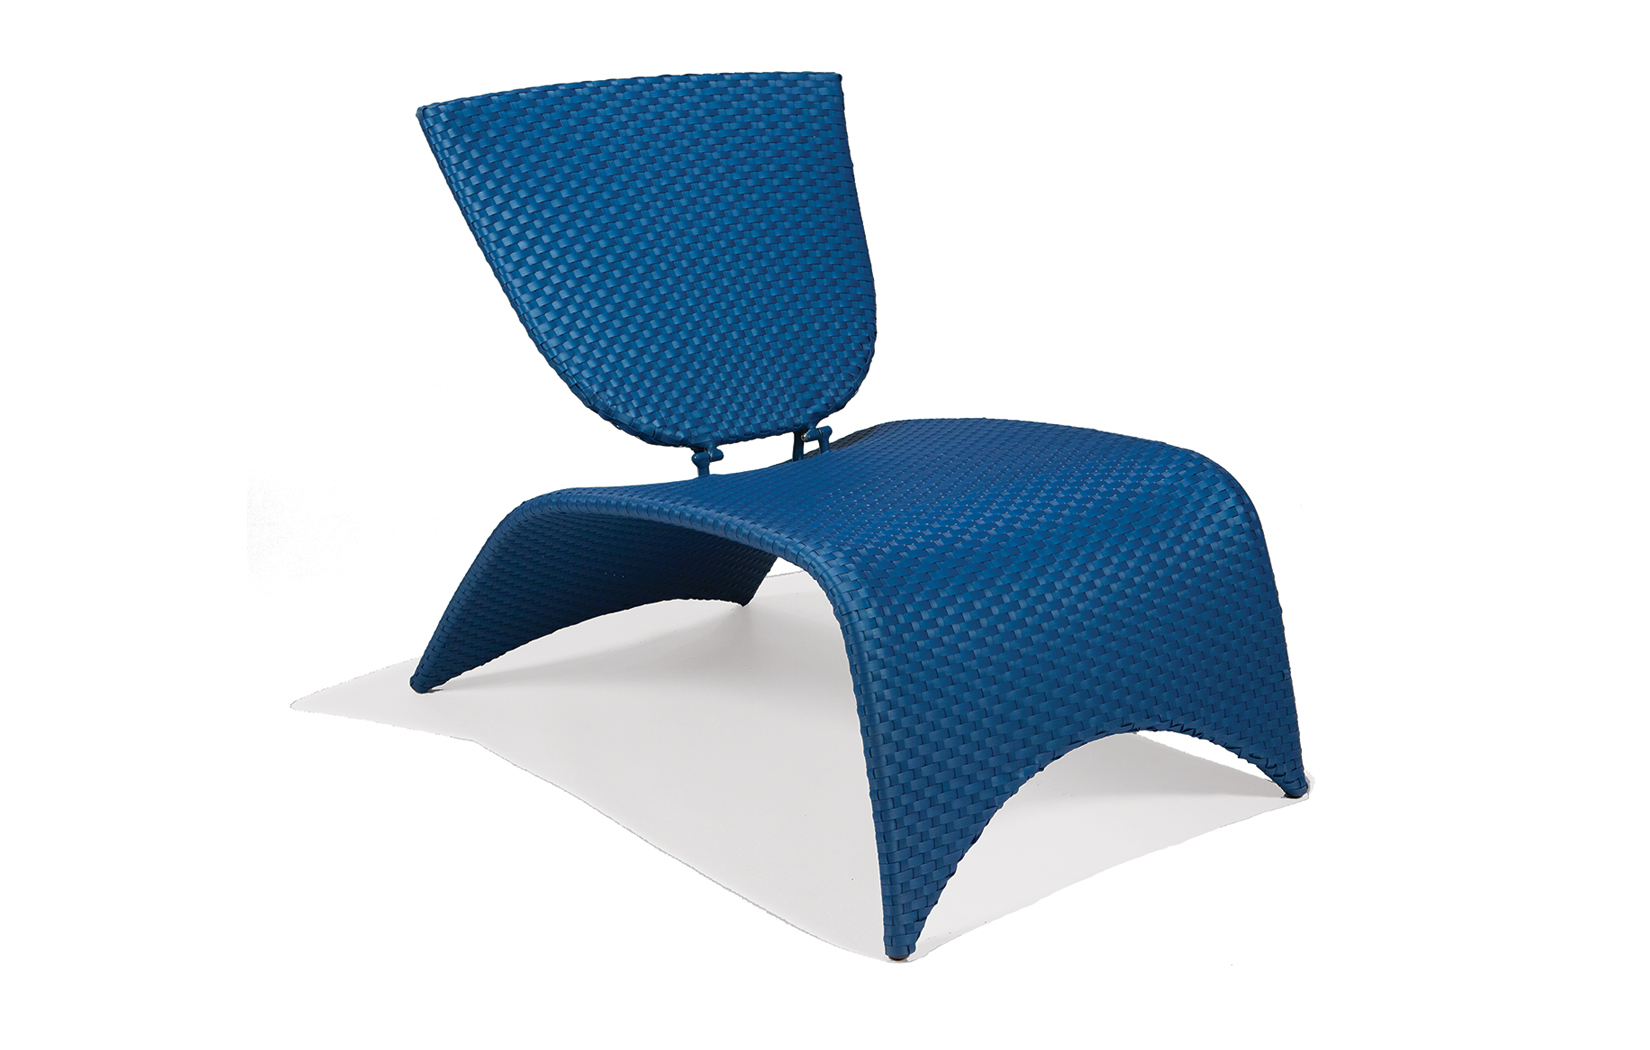 Zuma Lounge Chair with Folding Back